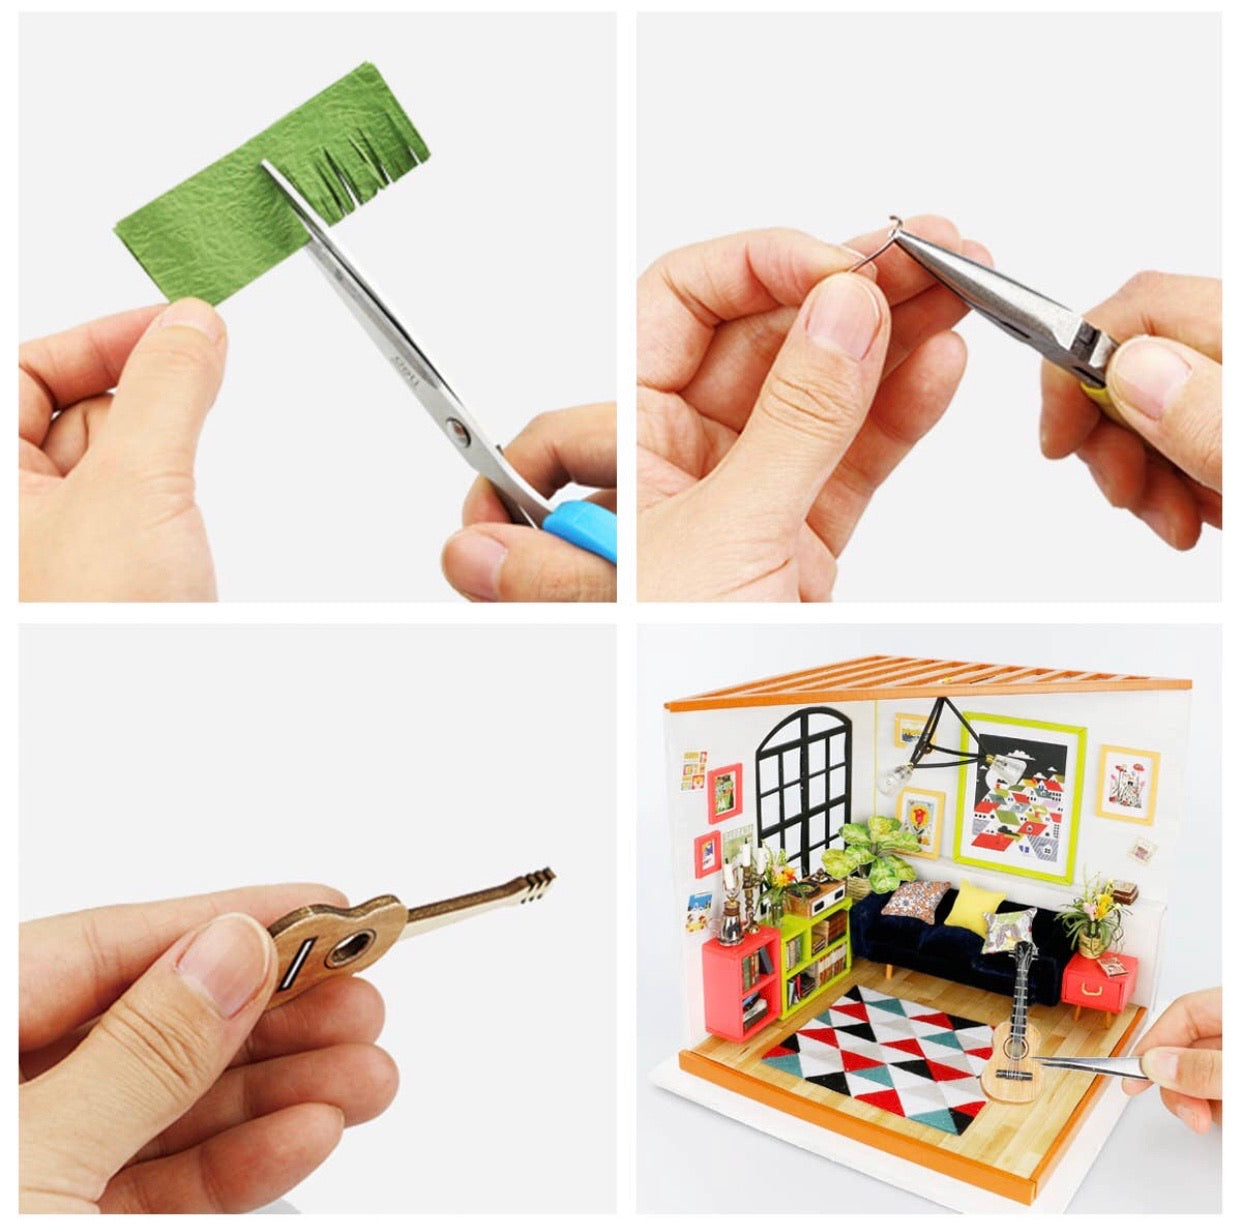 Lucas’ Groovy Sitting Room DIY Dollhouse Miniature Kit